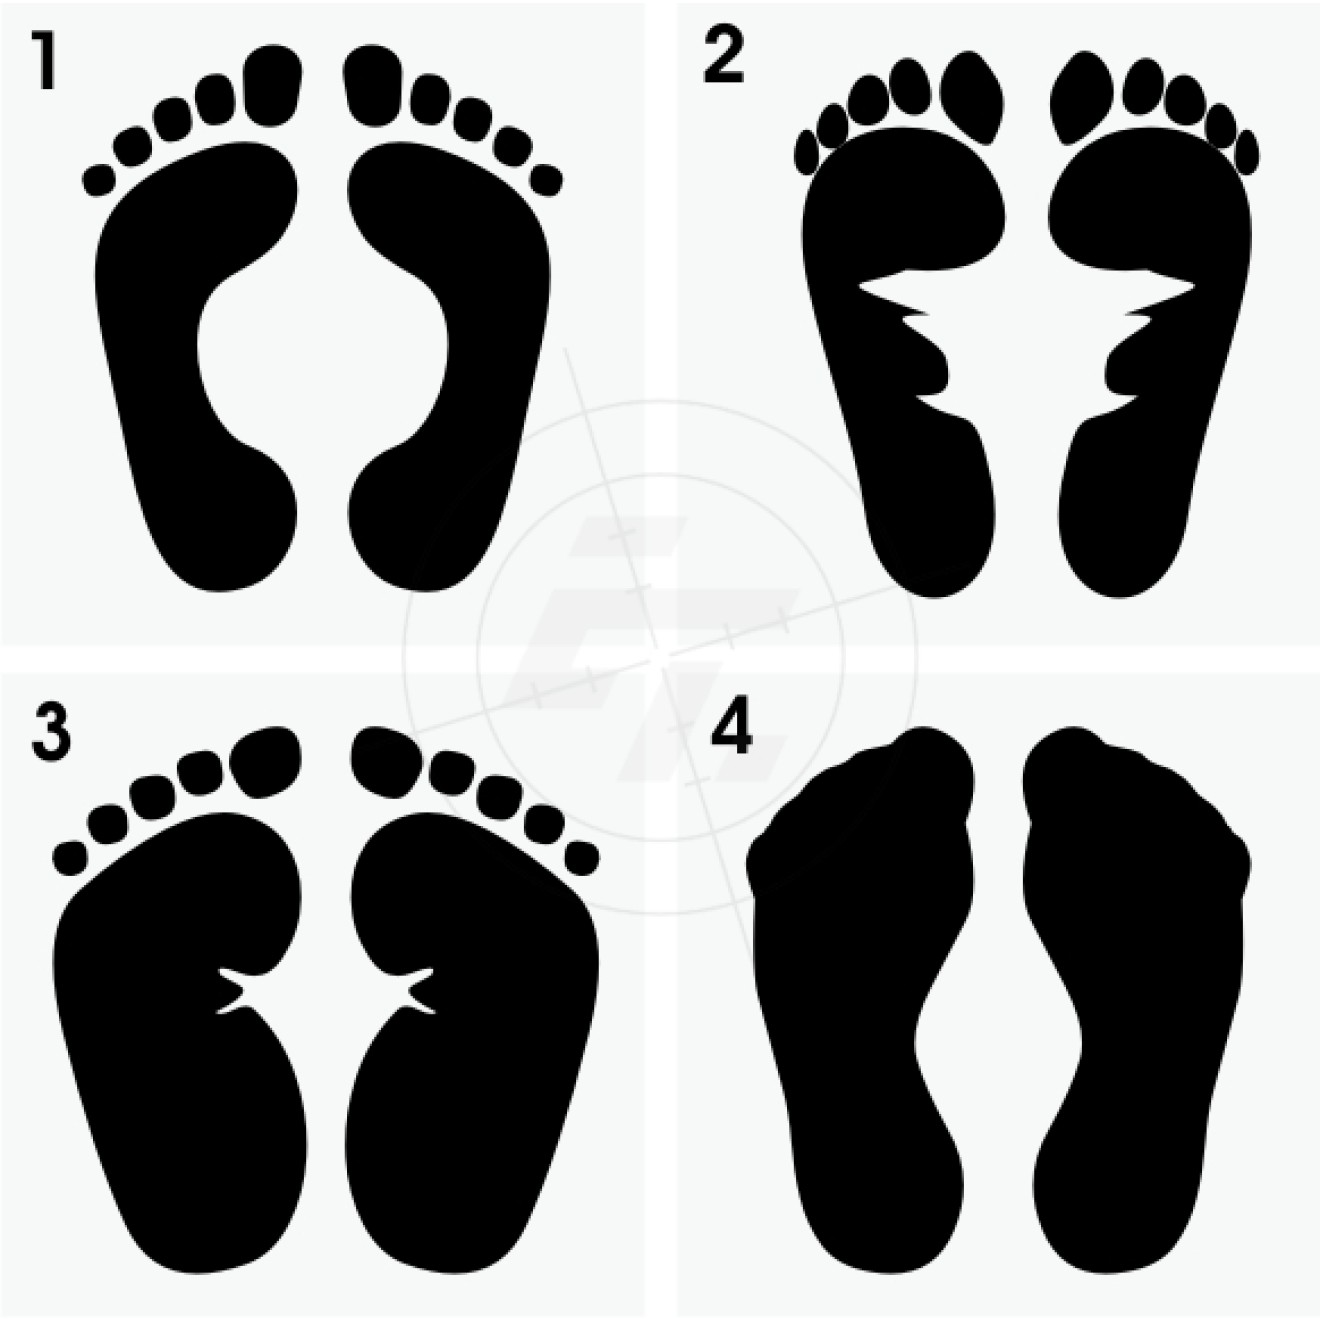 Fußspur, Fußabdruck, nackte Füße, 2er-Set